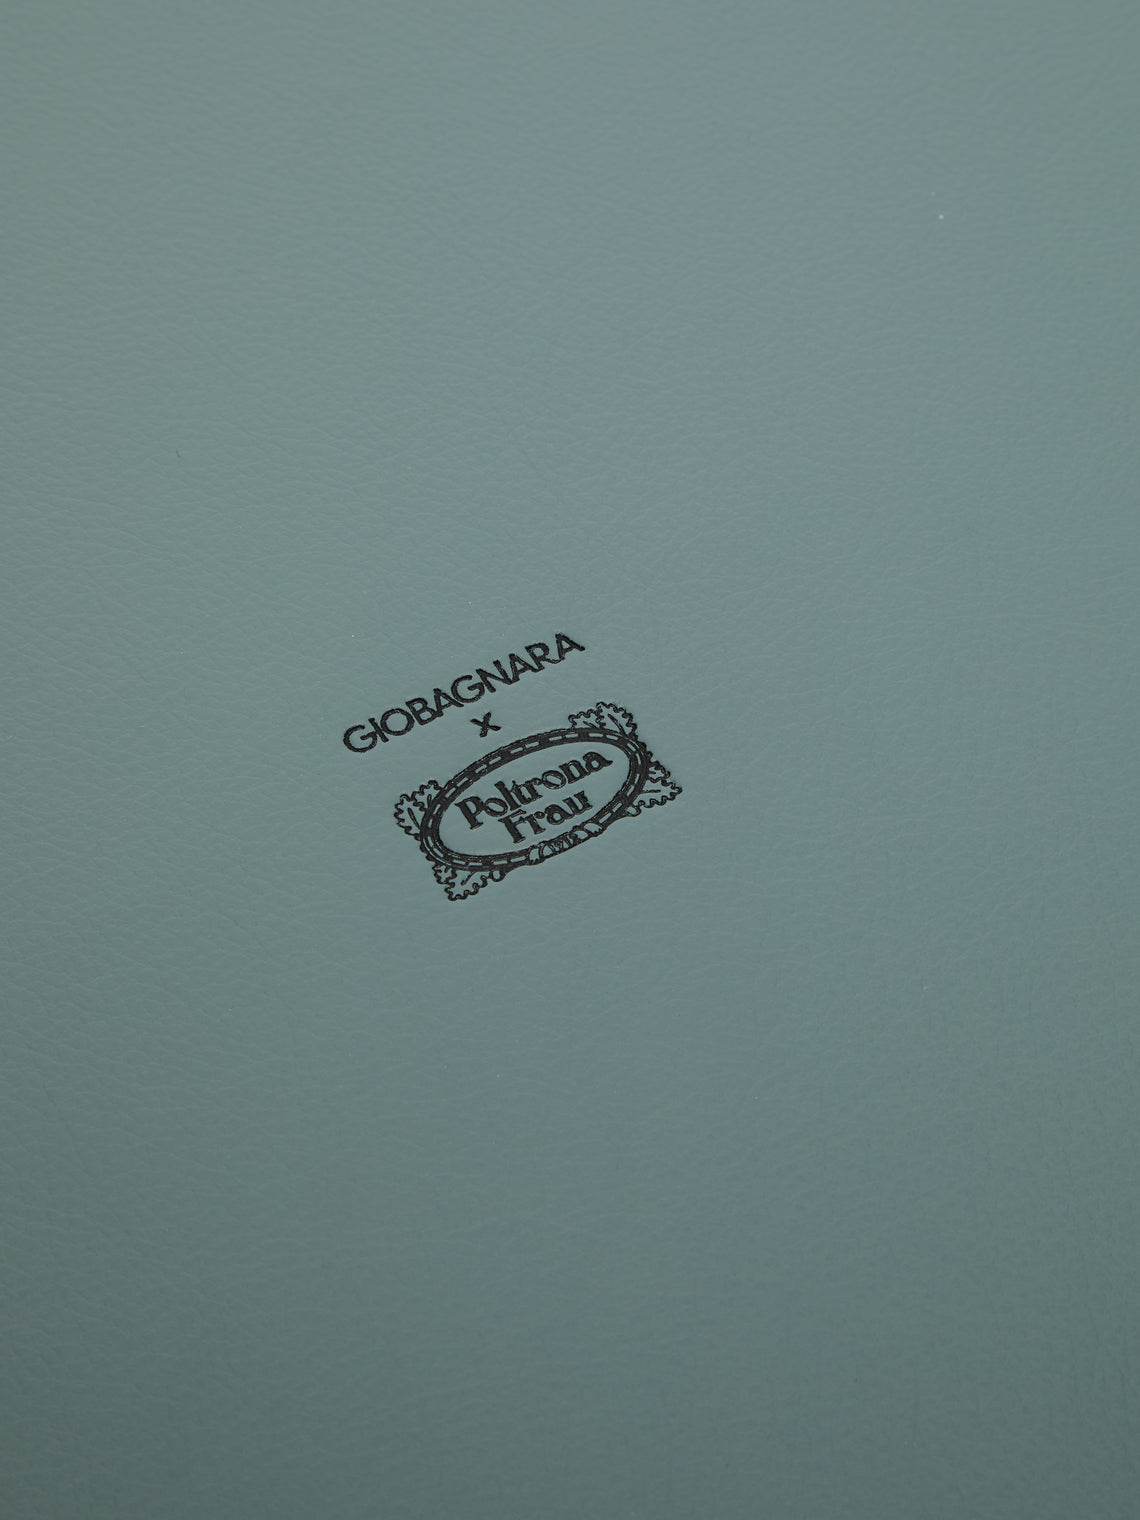 Giobagnara x Poltrona Frau - Walnut Large Rectangular Tray with Leather Inlay -  - ABASK